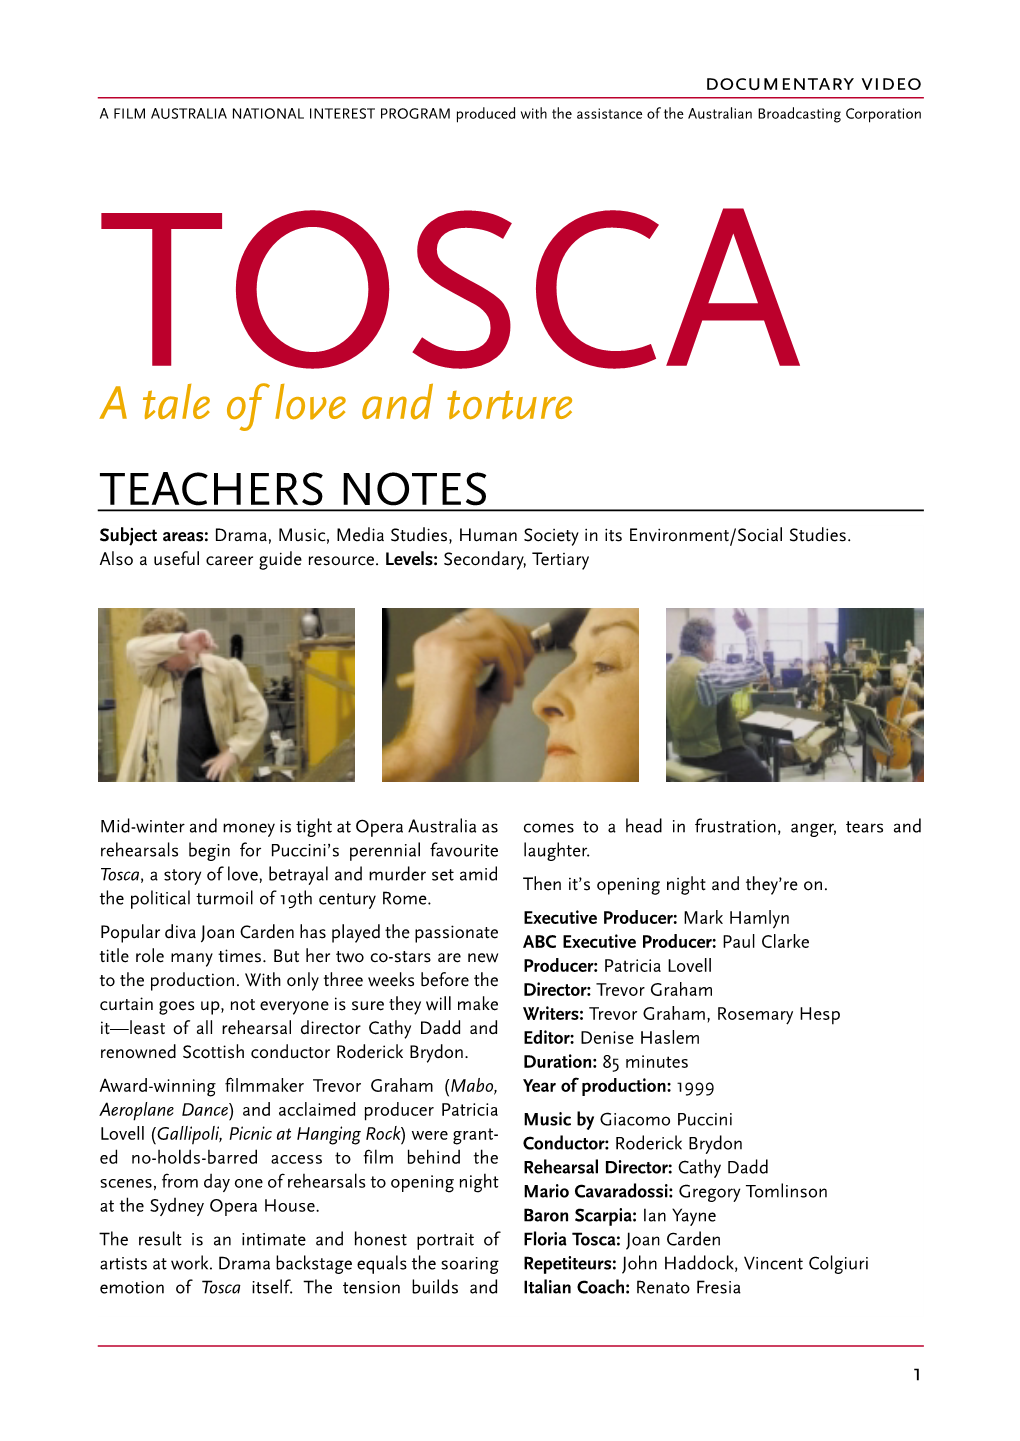 The Documentary, Tosca— Rome 1800